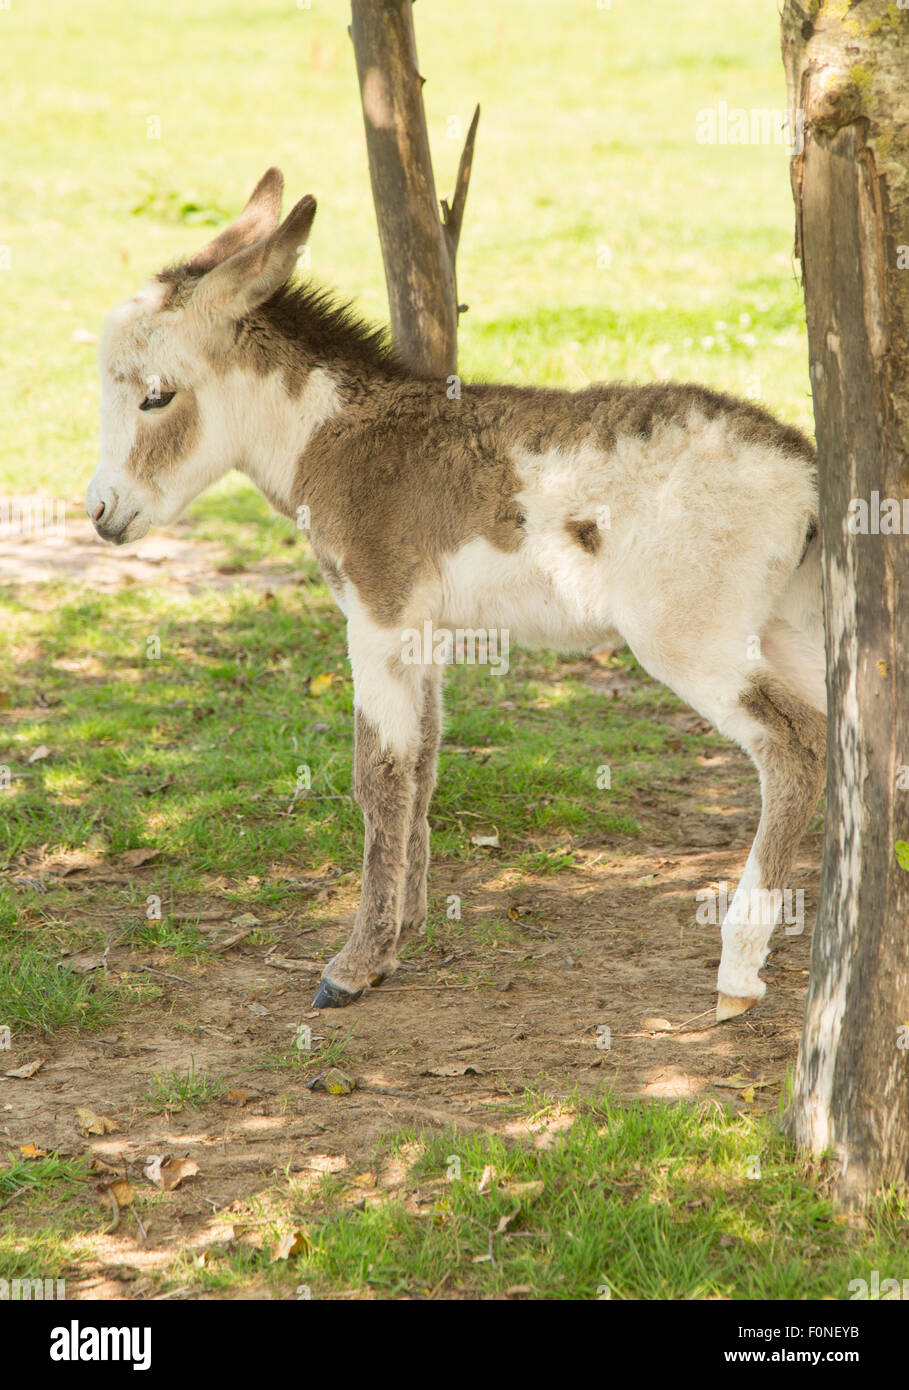 Carino baby donkey in agriturismo Foto Stock